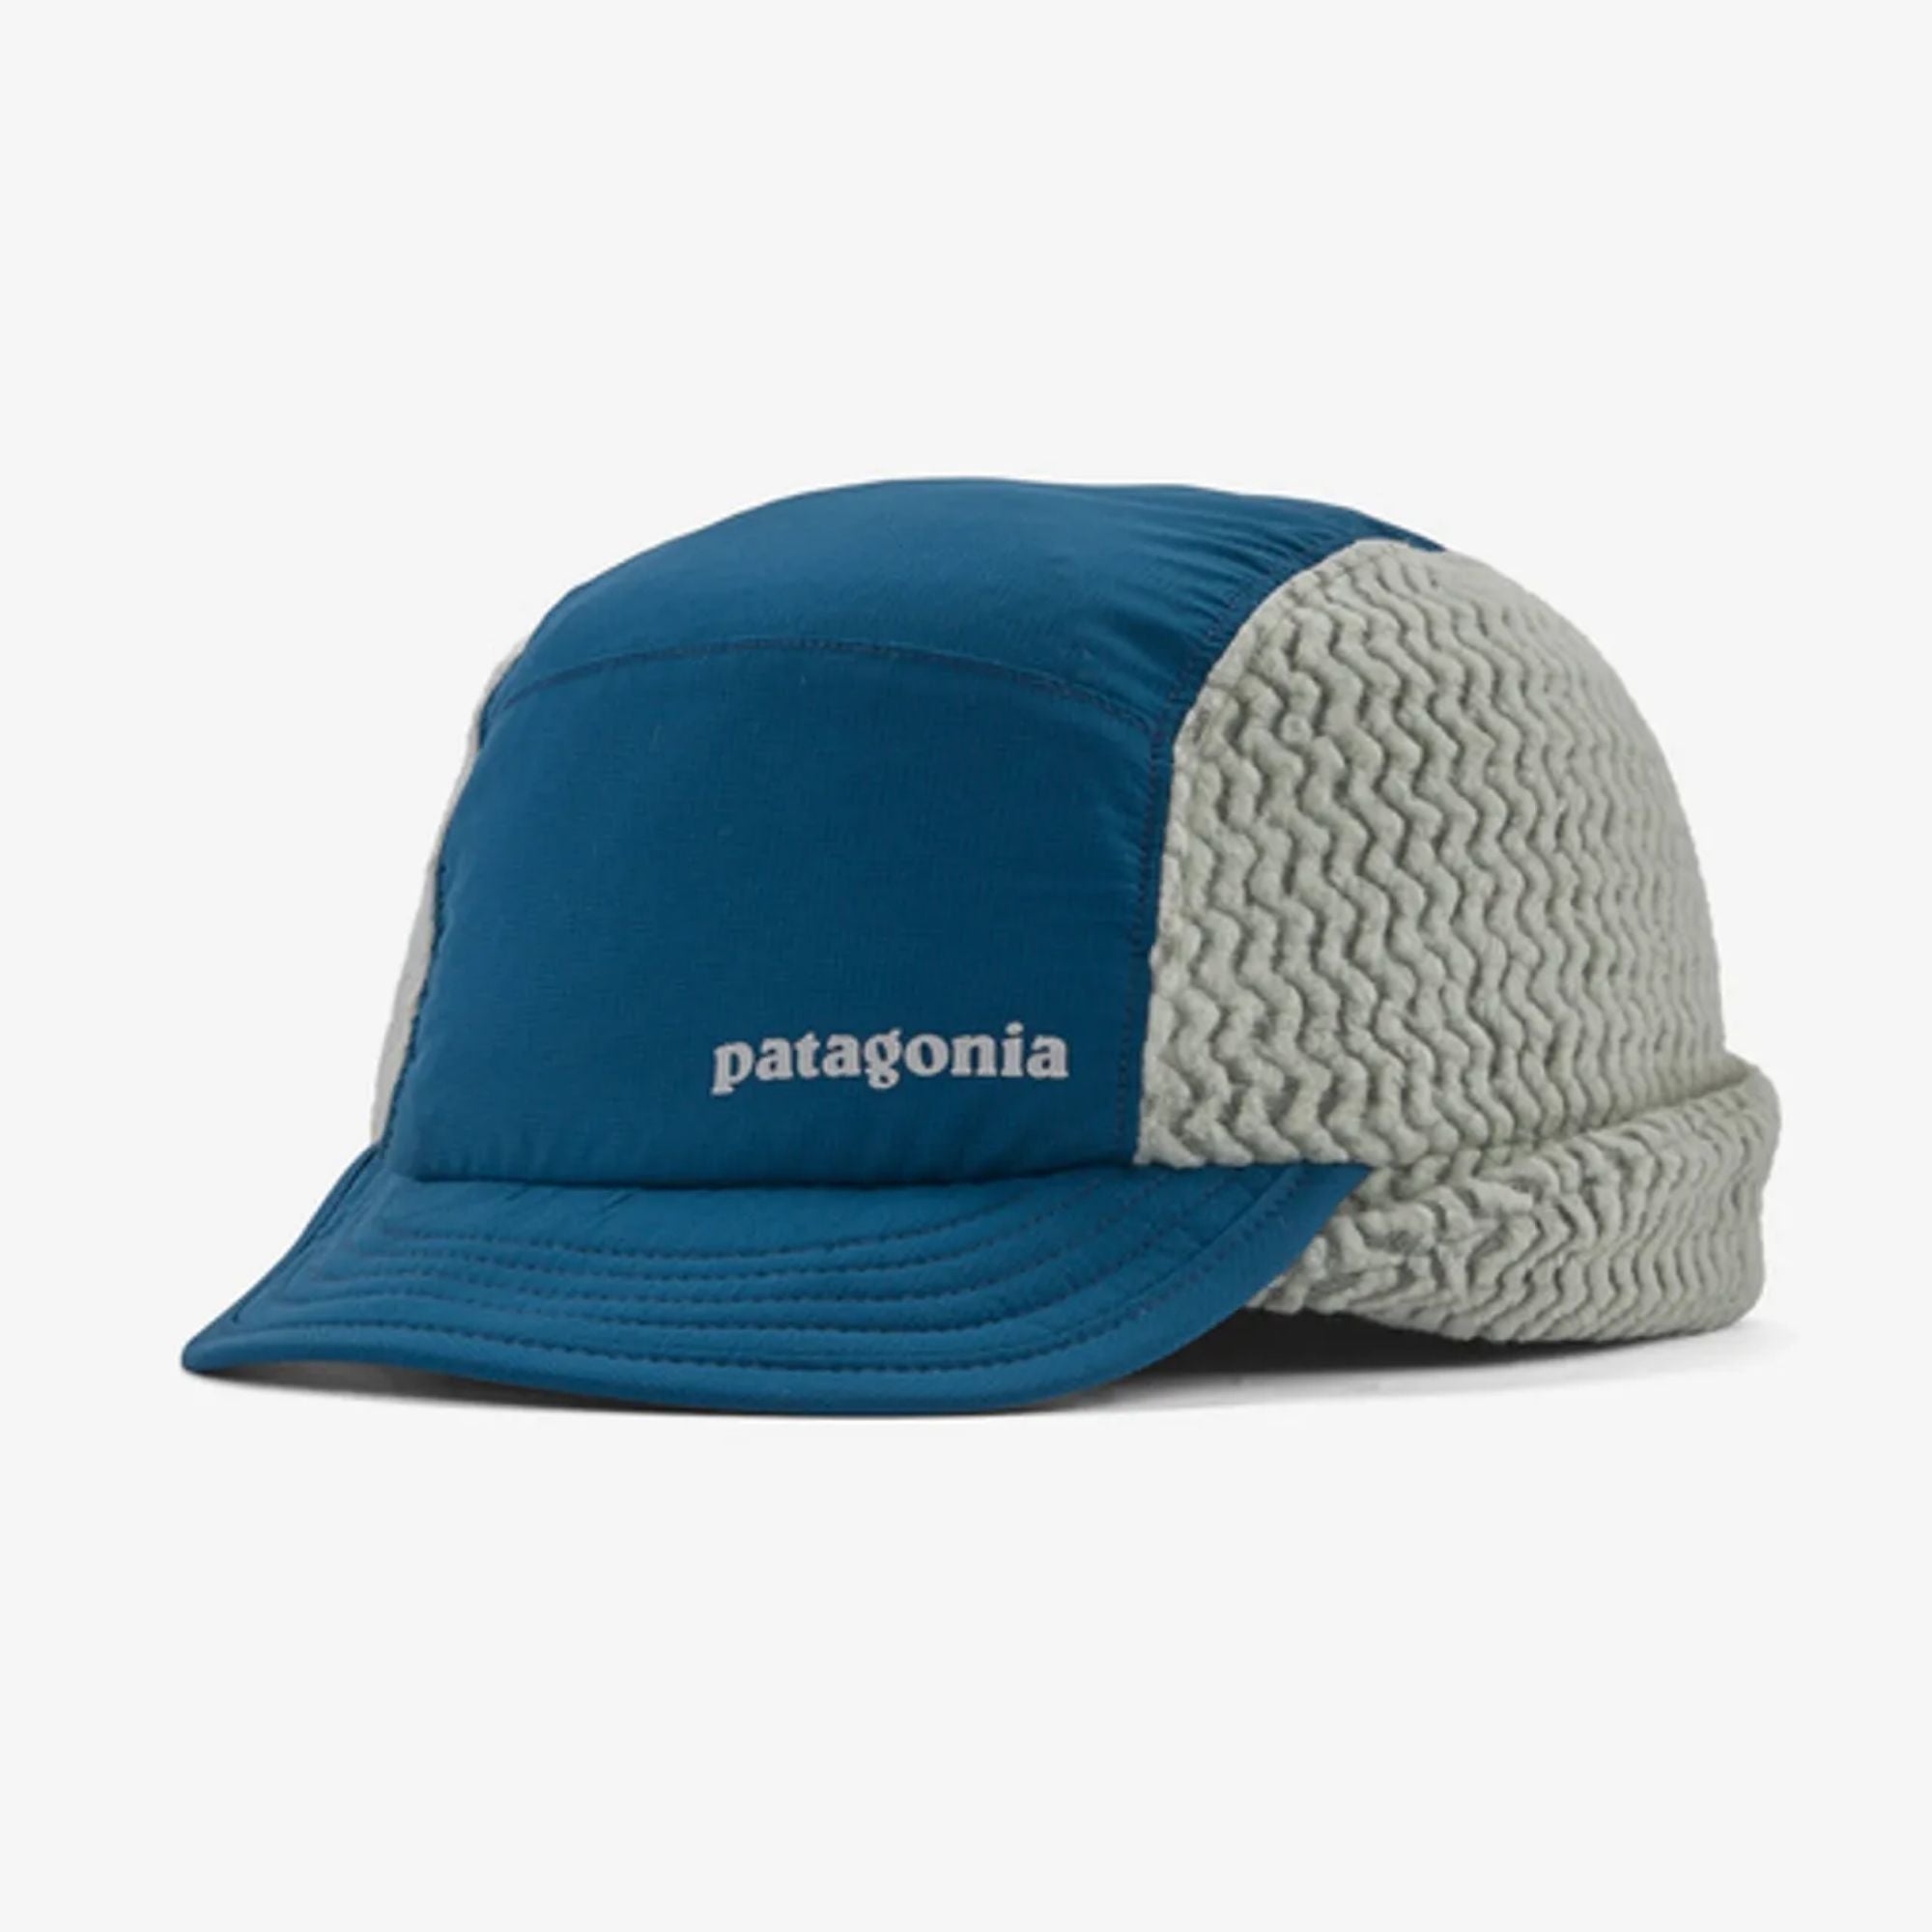 PATAGONIA Winter Duckbill Cap